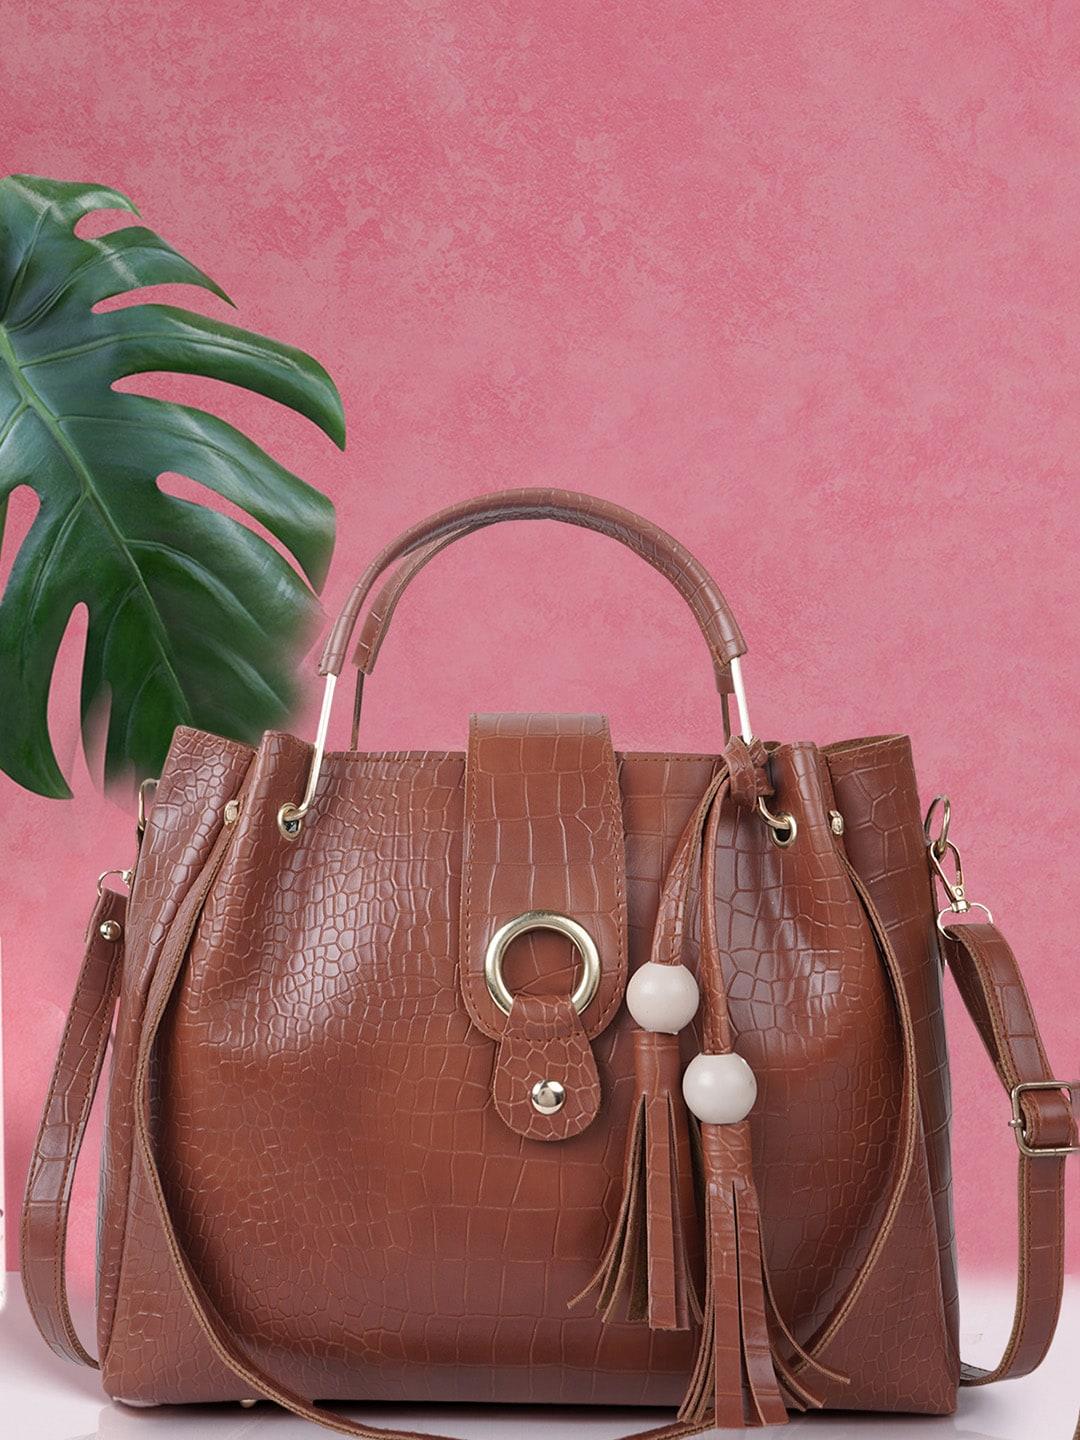 dressberry-brown-textured-structured-handheld-bag-with-tasselled